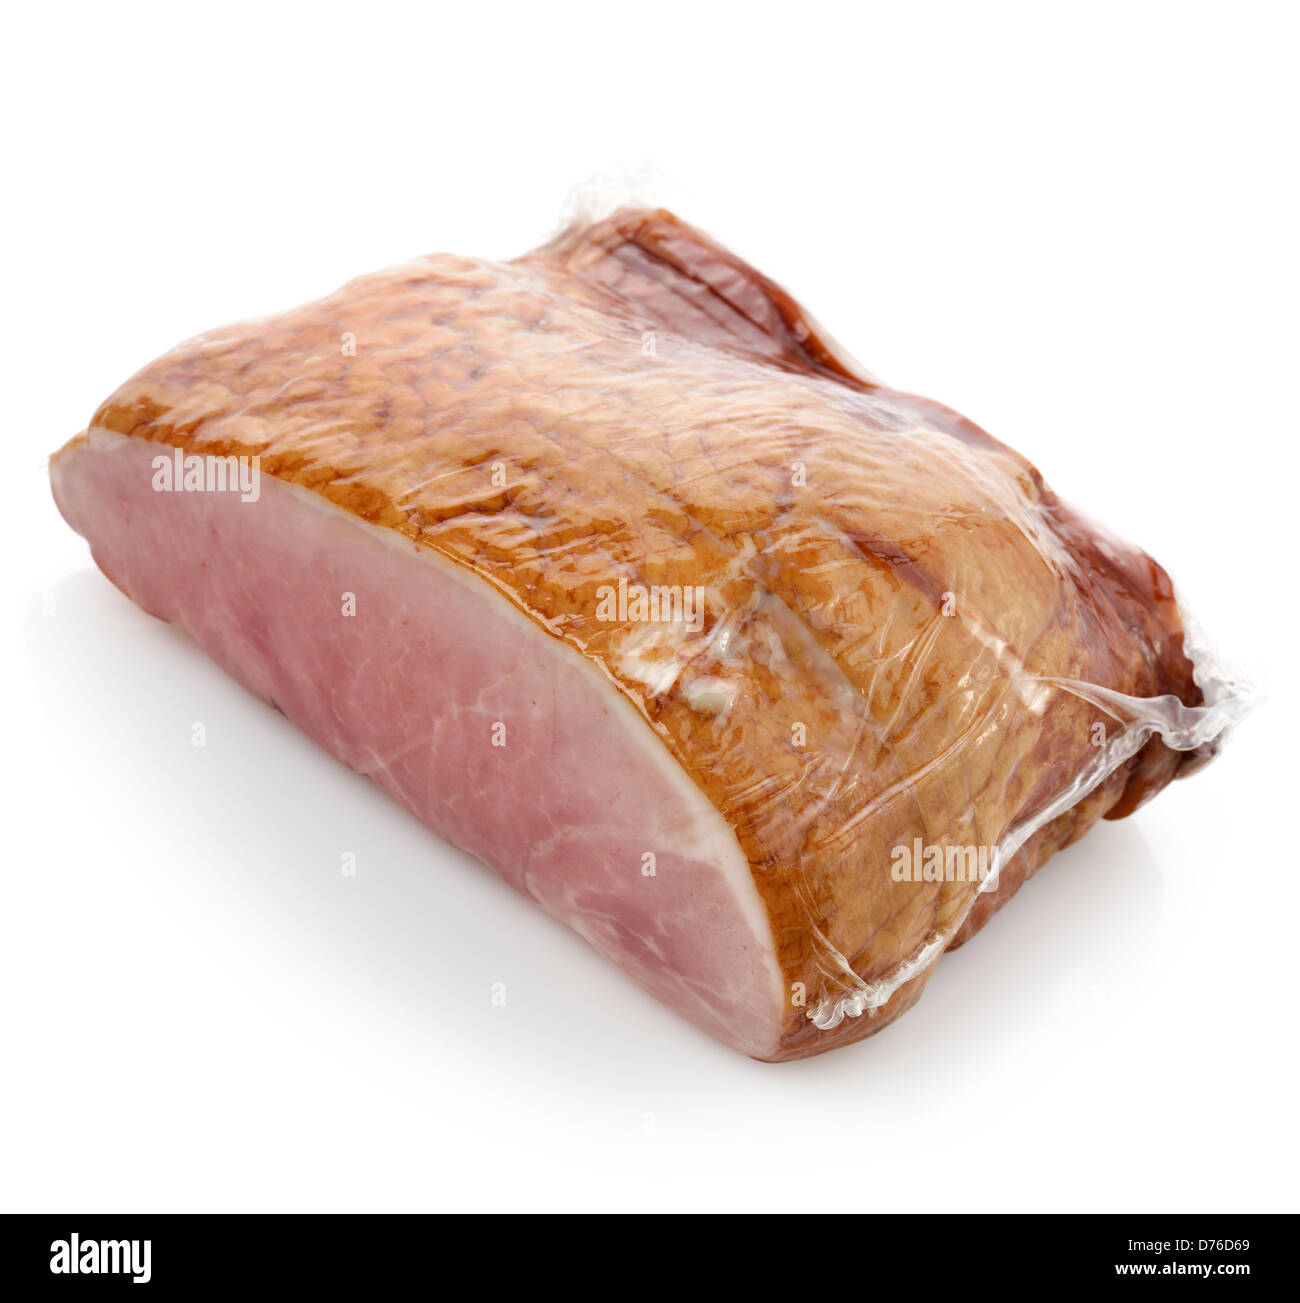 Smoked Ham On White Background. Stock Photo